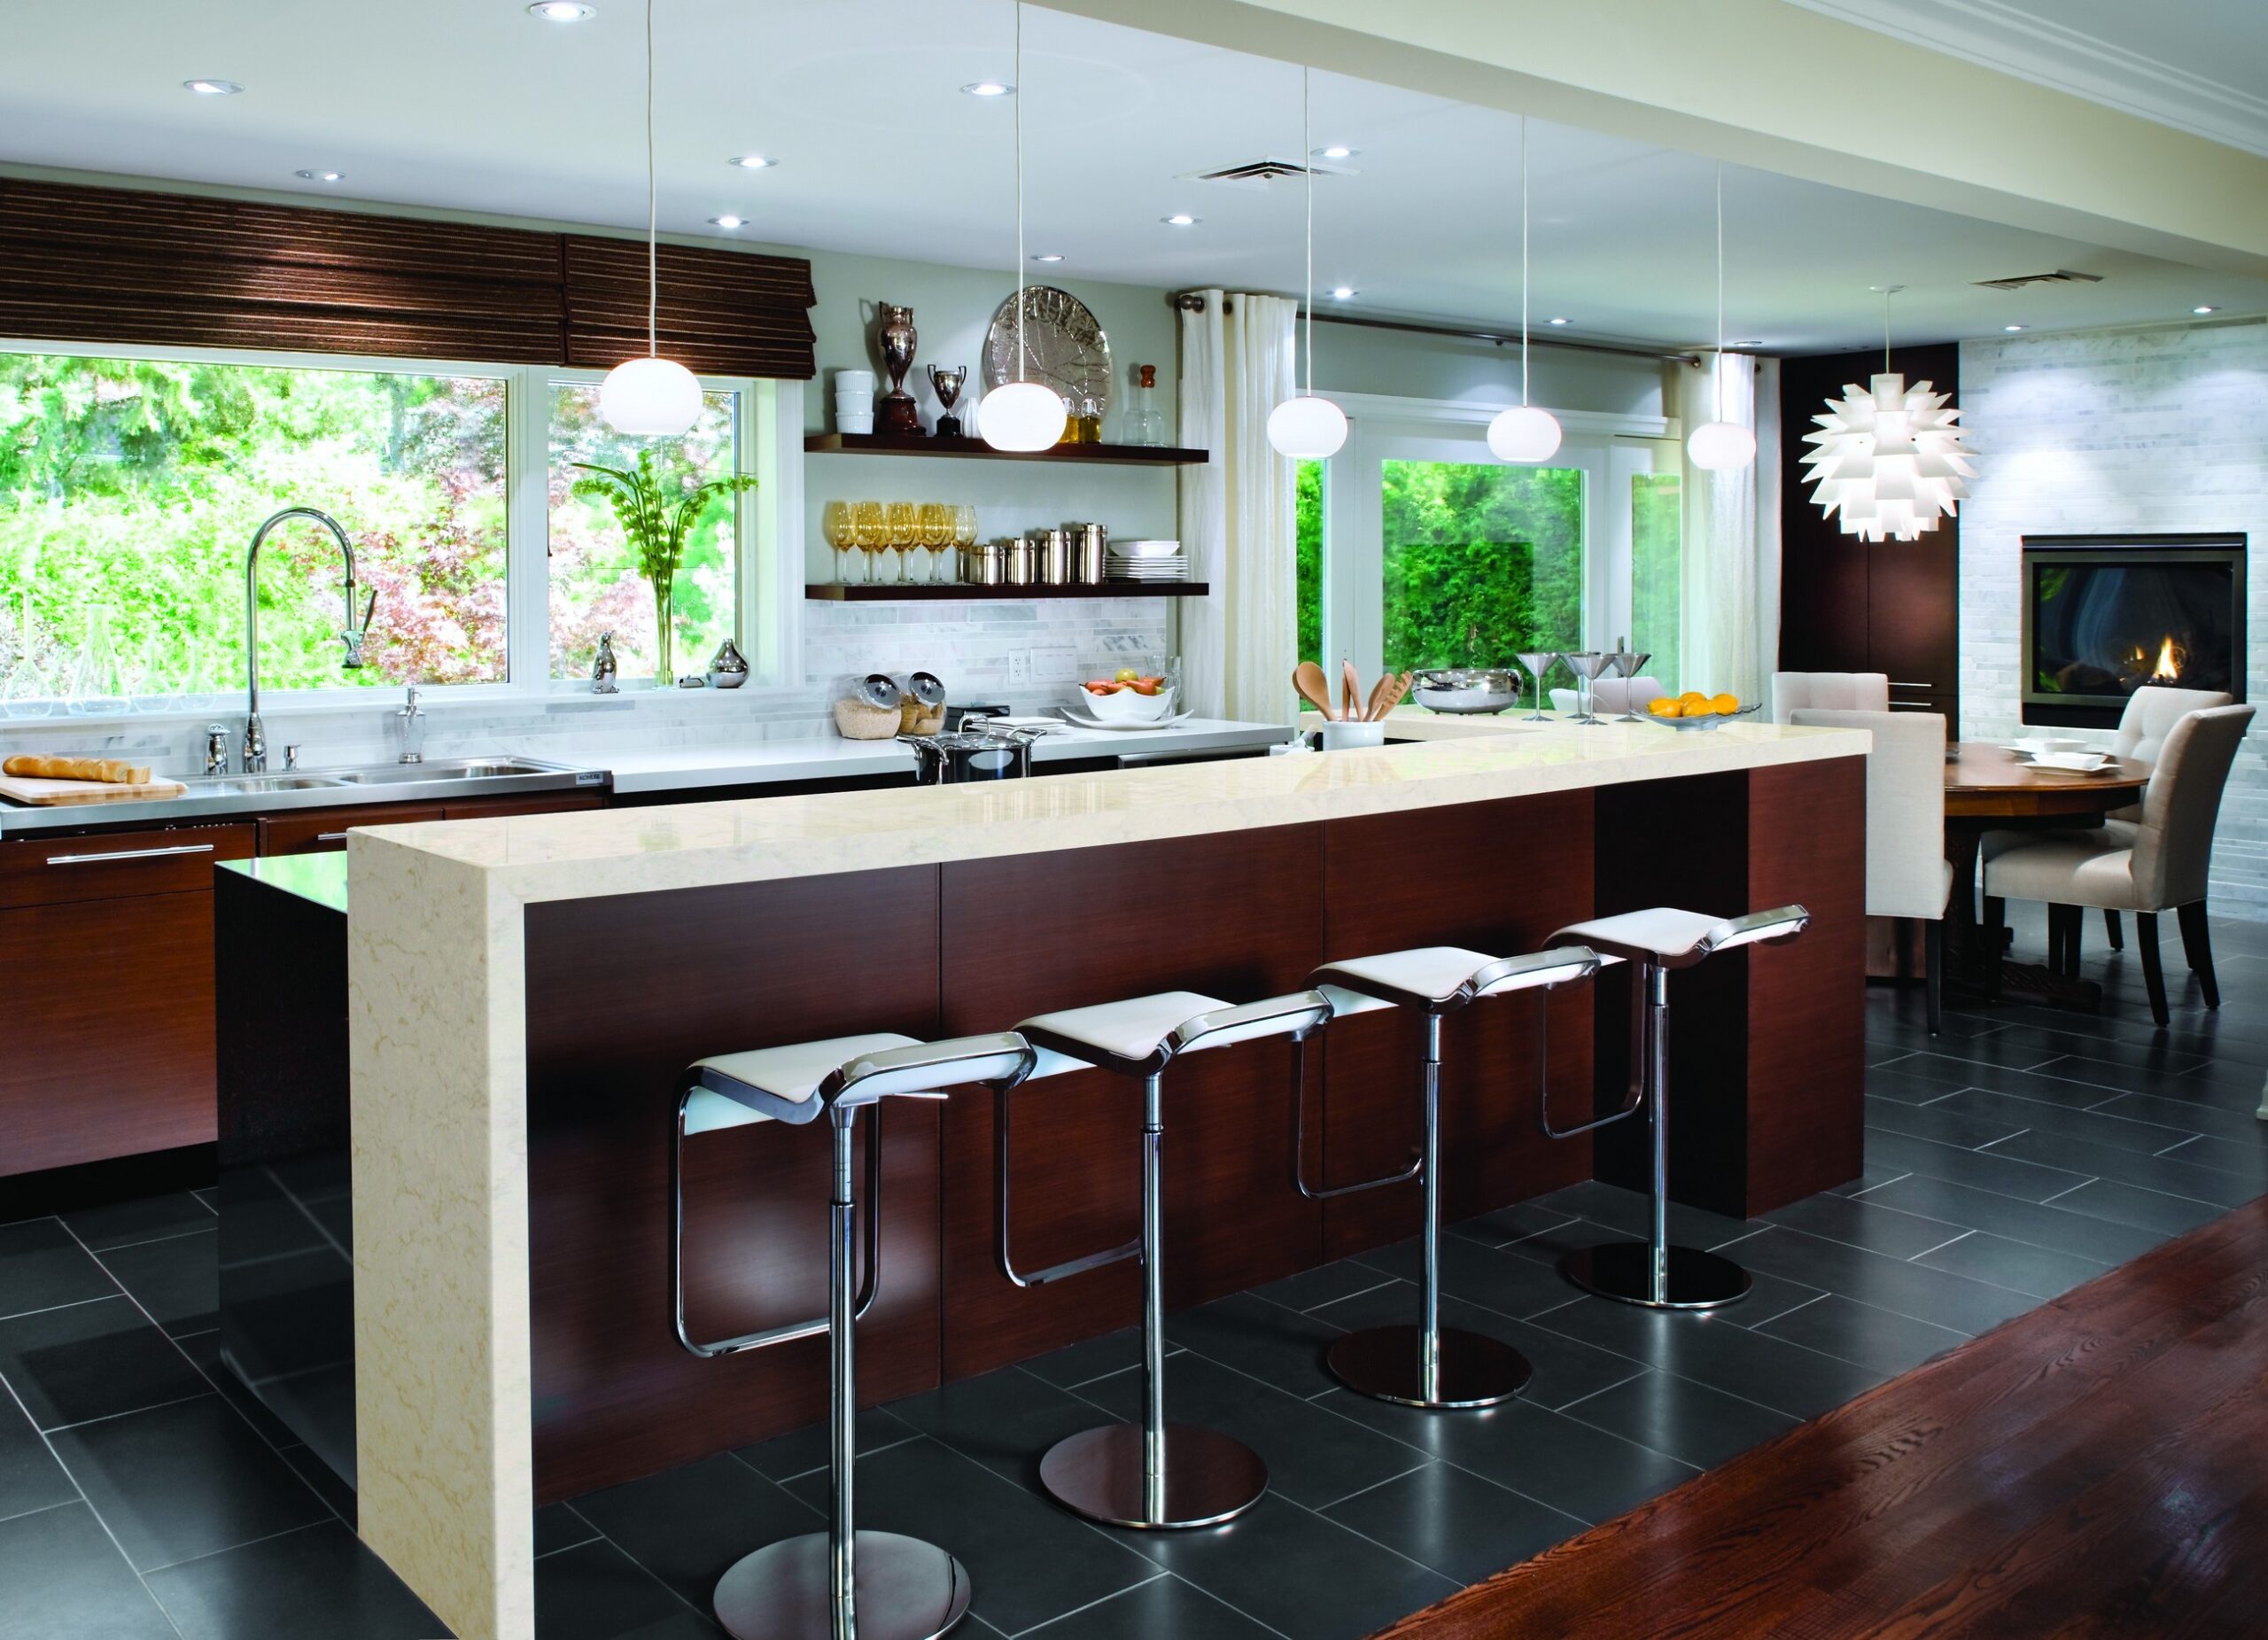 Viatara Soprano kitchen countertops with island and bar stools